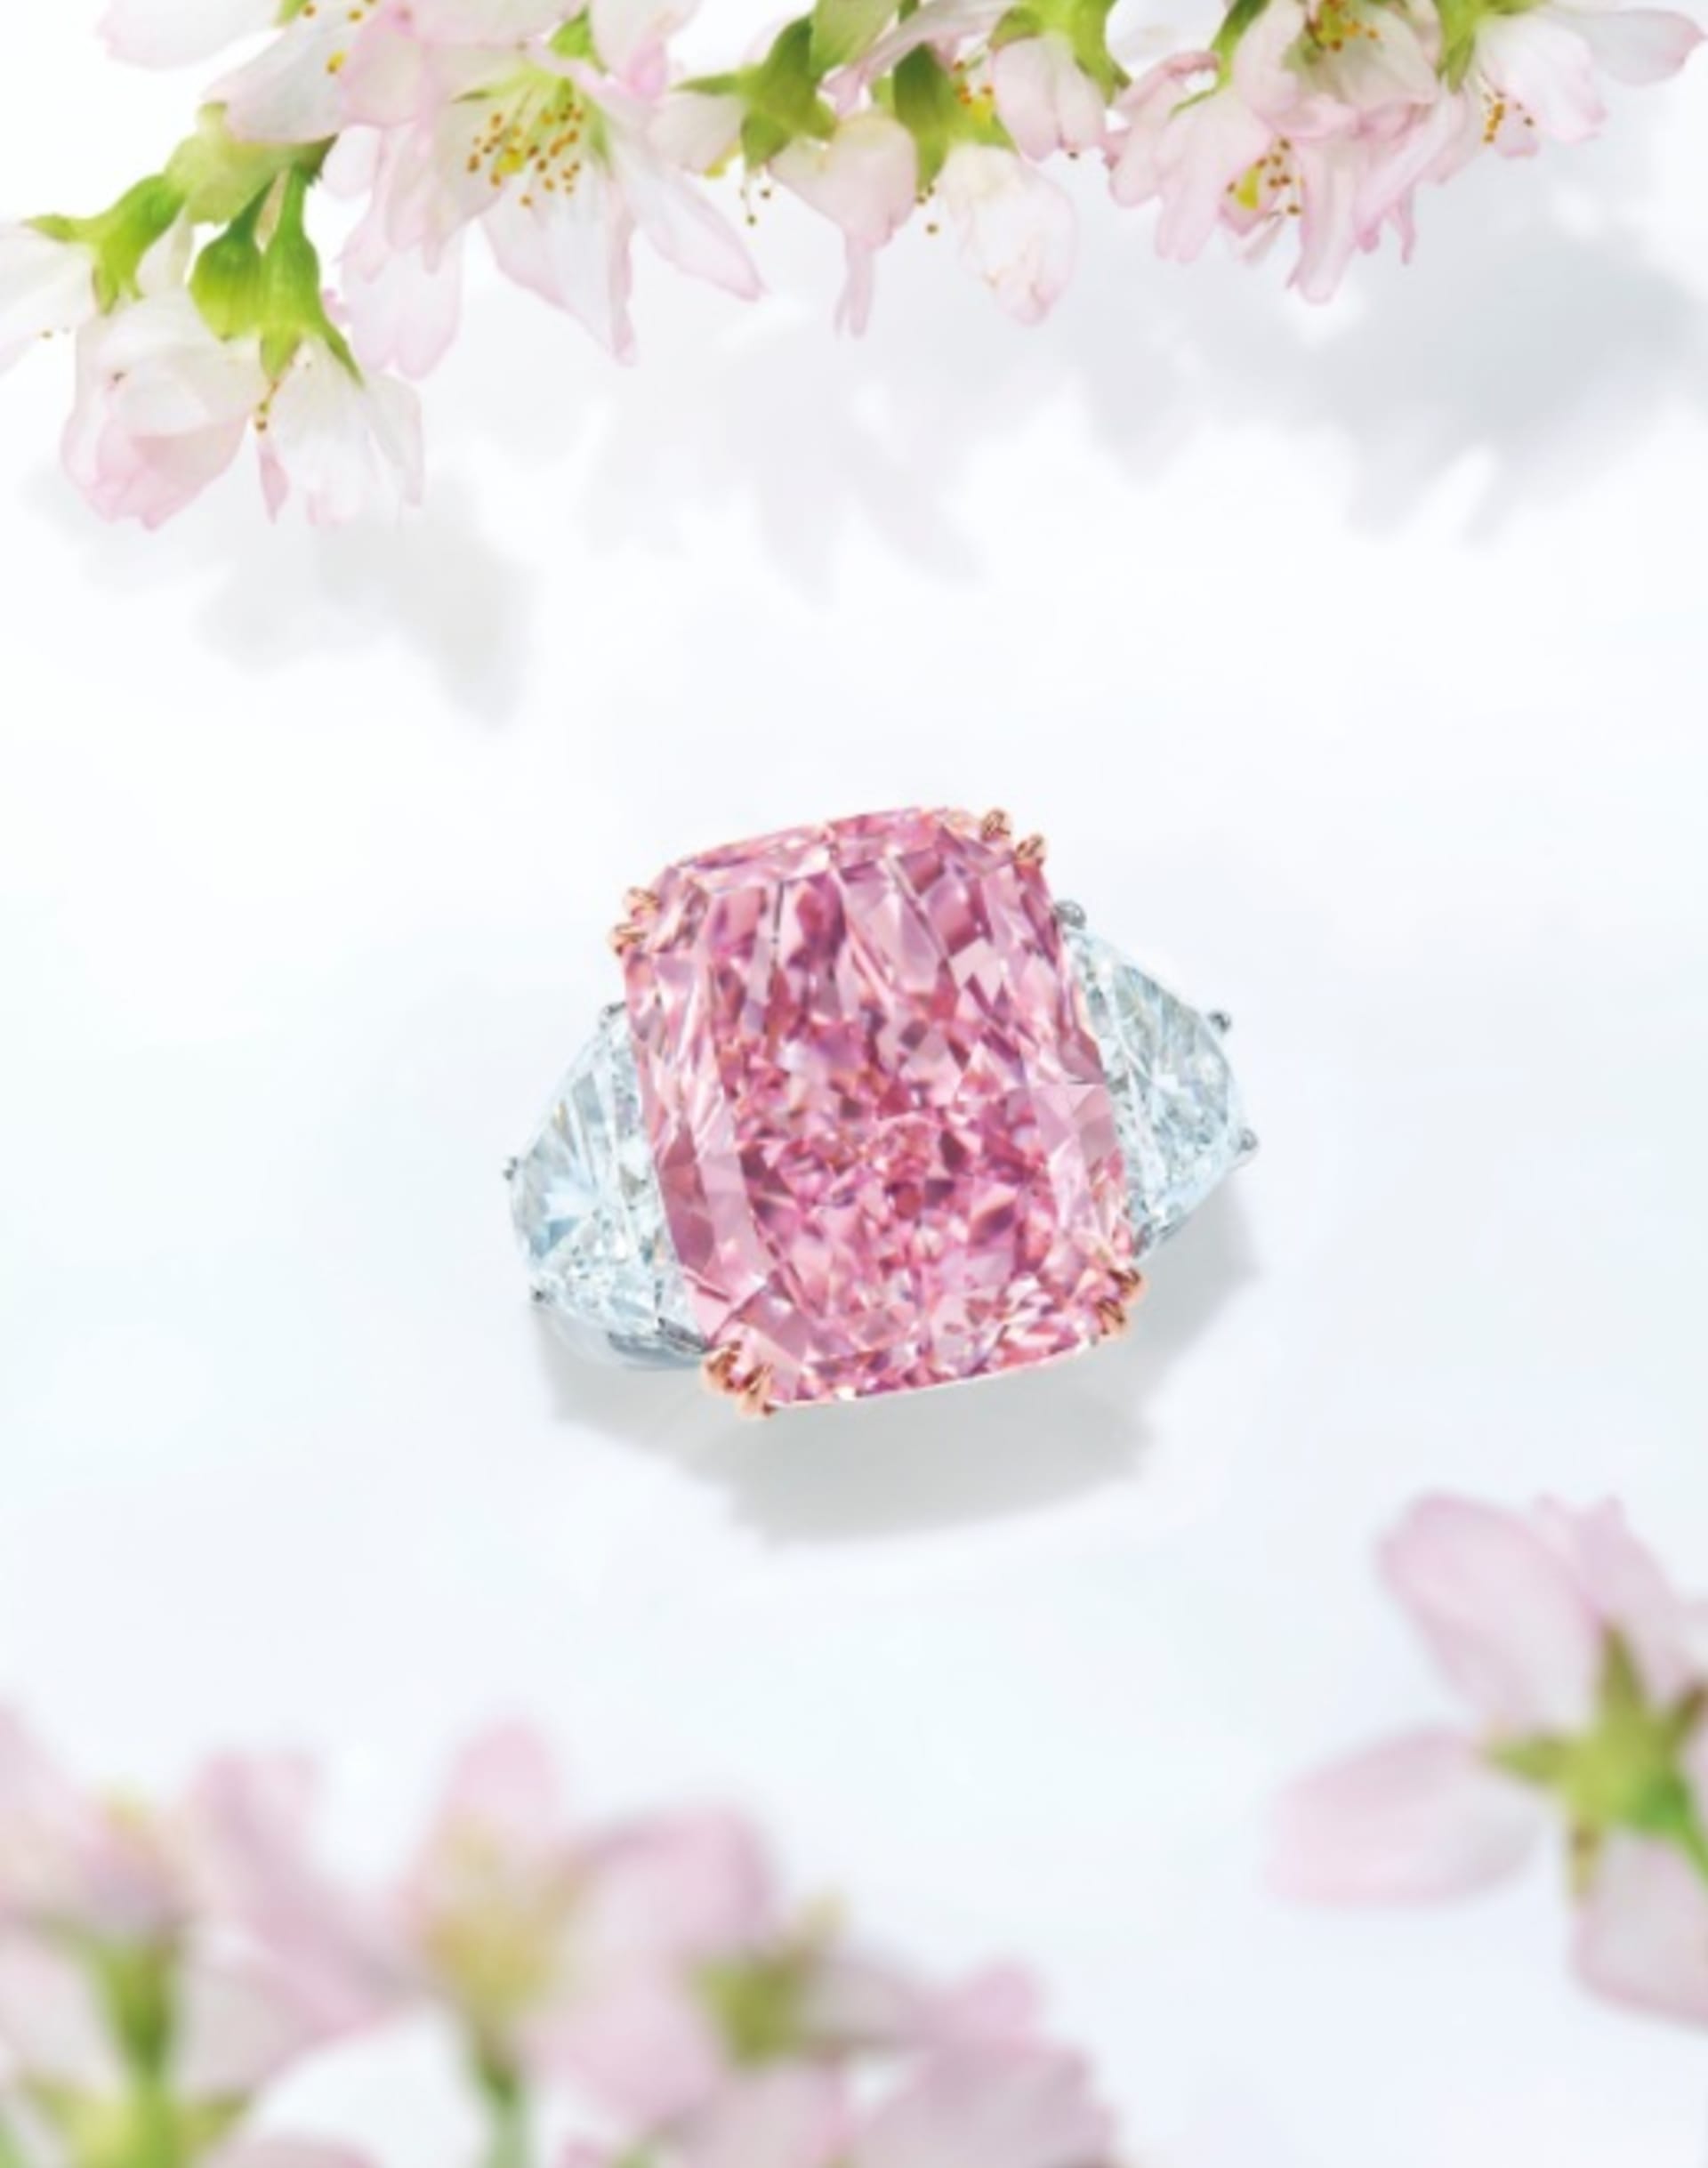 Stane se Sakura nejdražším vydraženým růžovým diamantem v aukci? (autor: aukční síň Christie's)